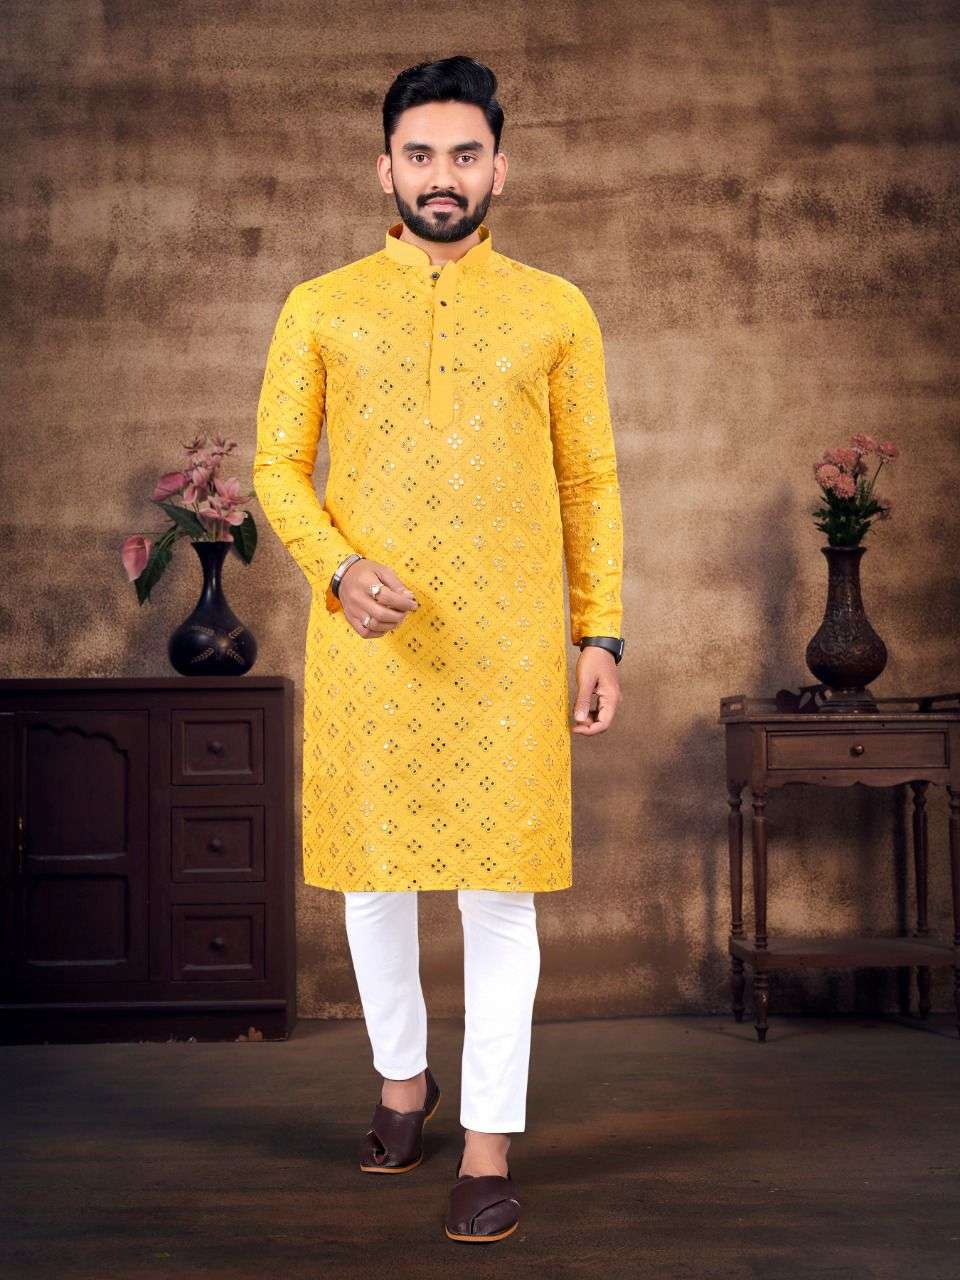 Cotton Designer Long Kurta Pyjama, Size: 38-44 at Rs 2400/piece in Surat |  ID: 18984205130